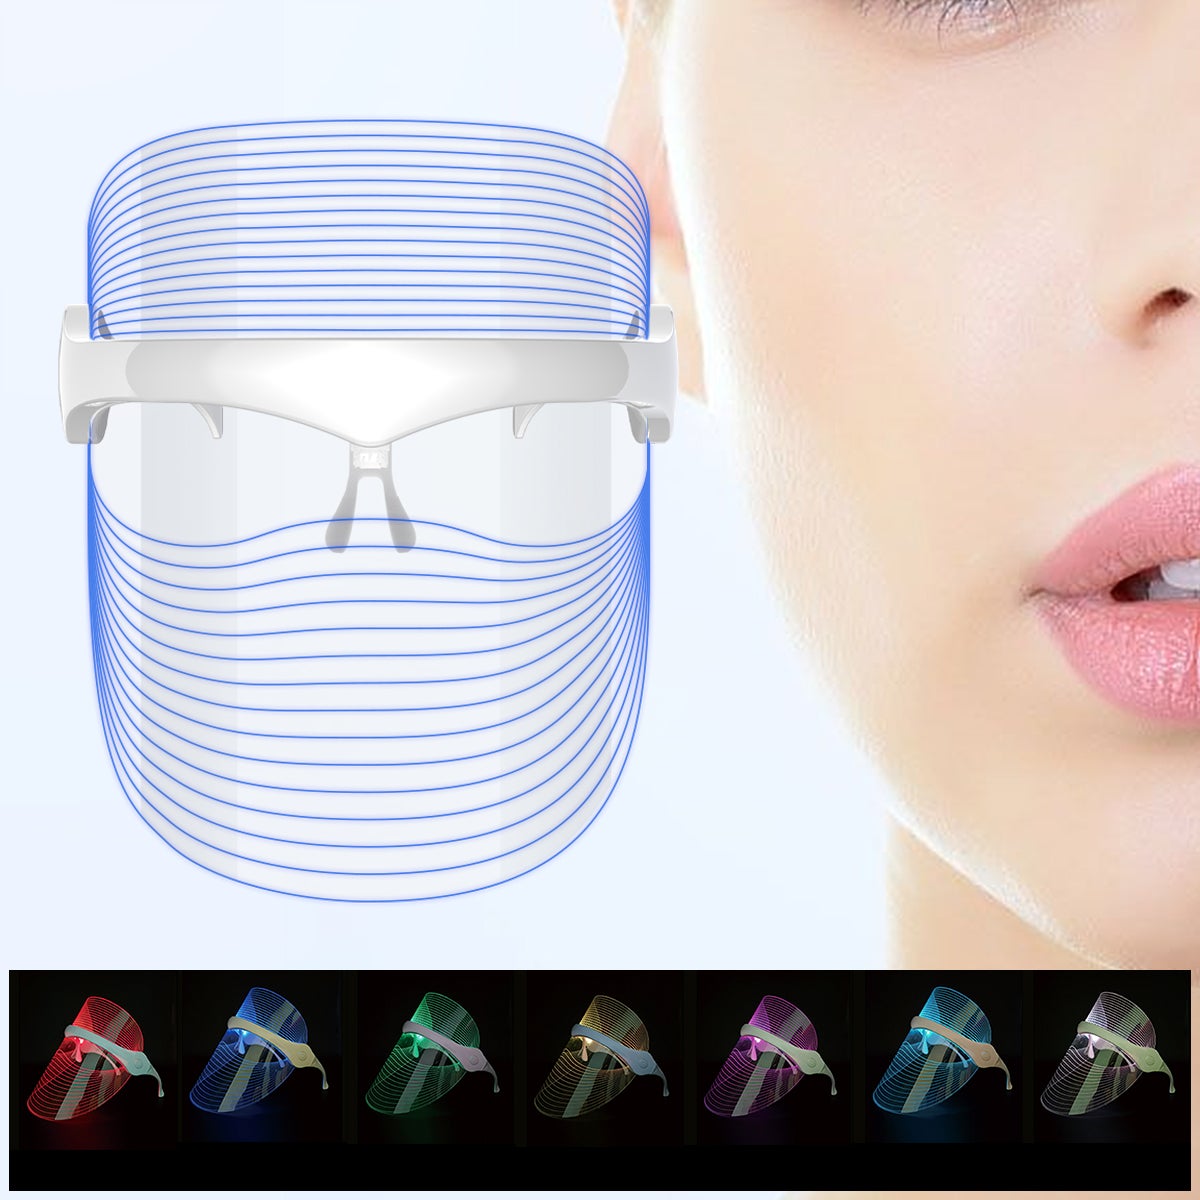 LED Photon Light Face Skin Therapy Mask Wrinkle Acne Removal Moisturizing Skincare Beauty Device 7 colours Skin care